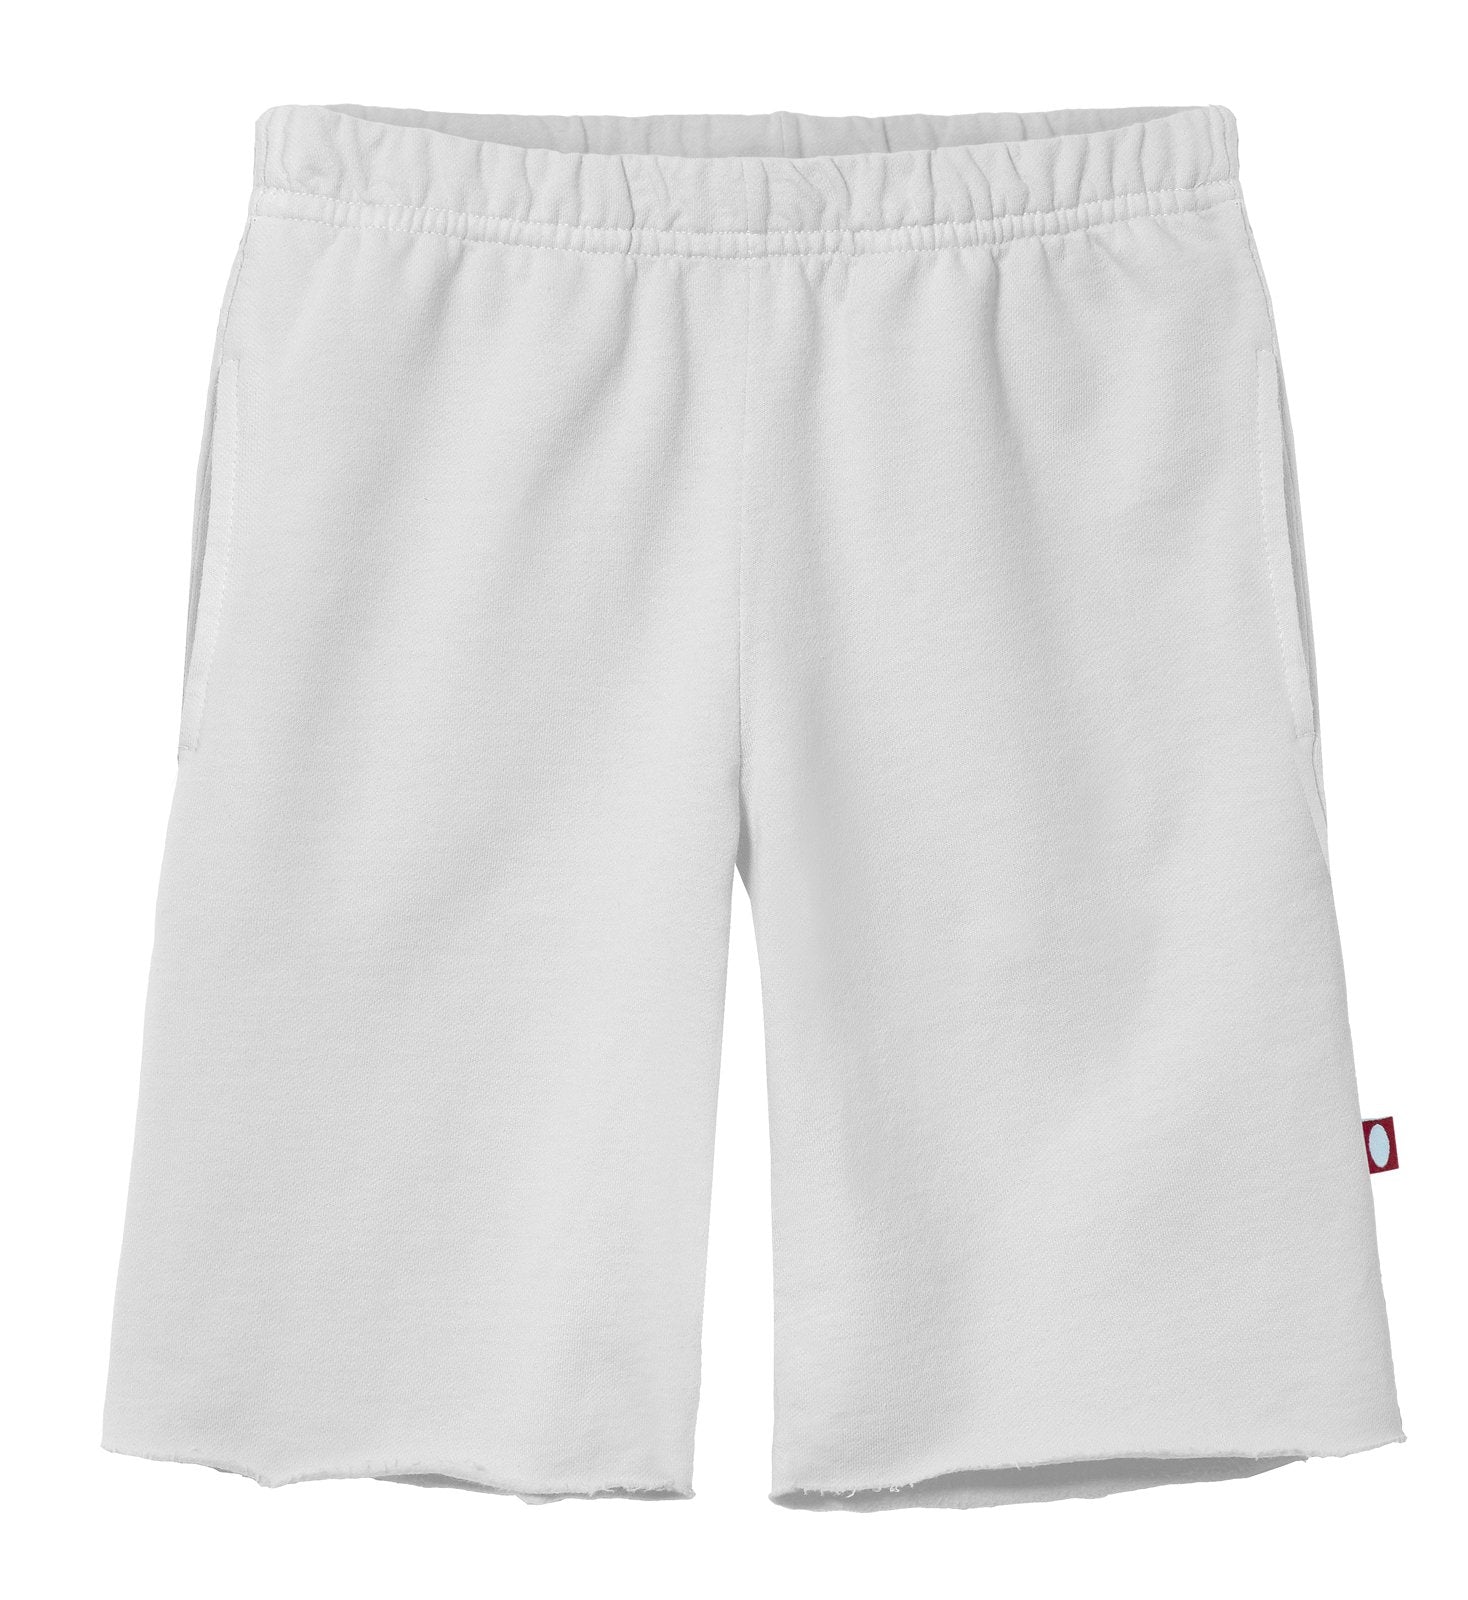 XS White Boxer Shorts - 30 Waist Sleek Fit